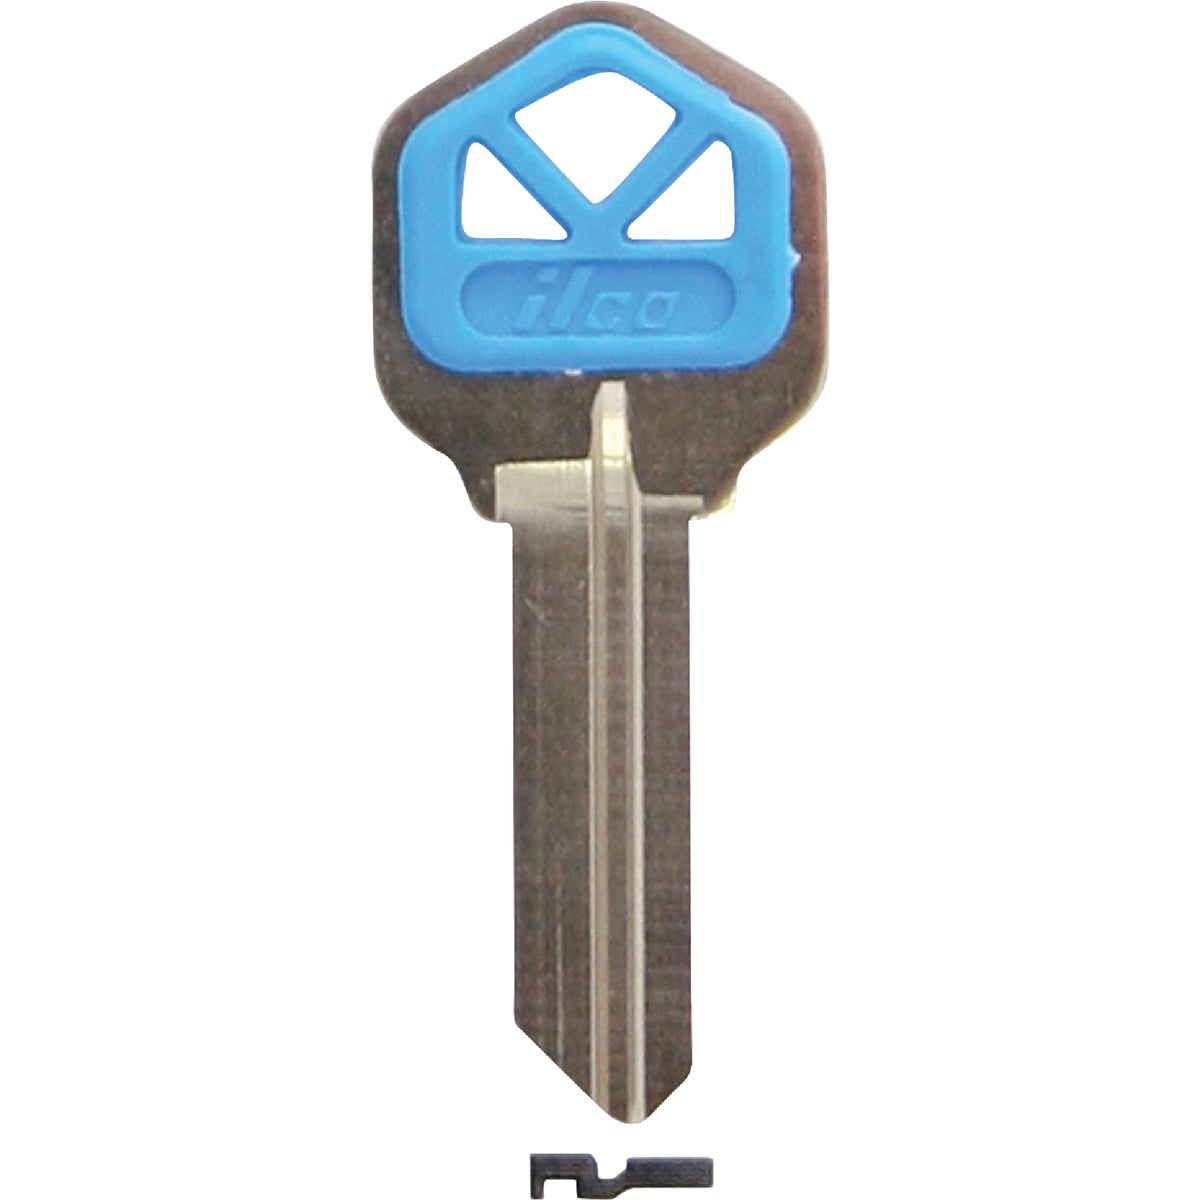 Item 201103, Nickel-plated key blank with plastic insert.